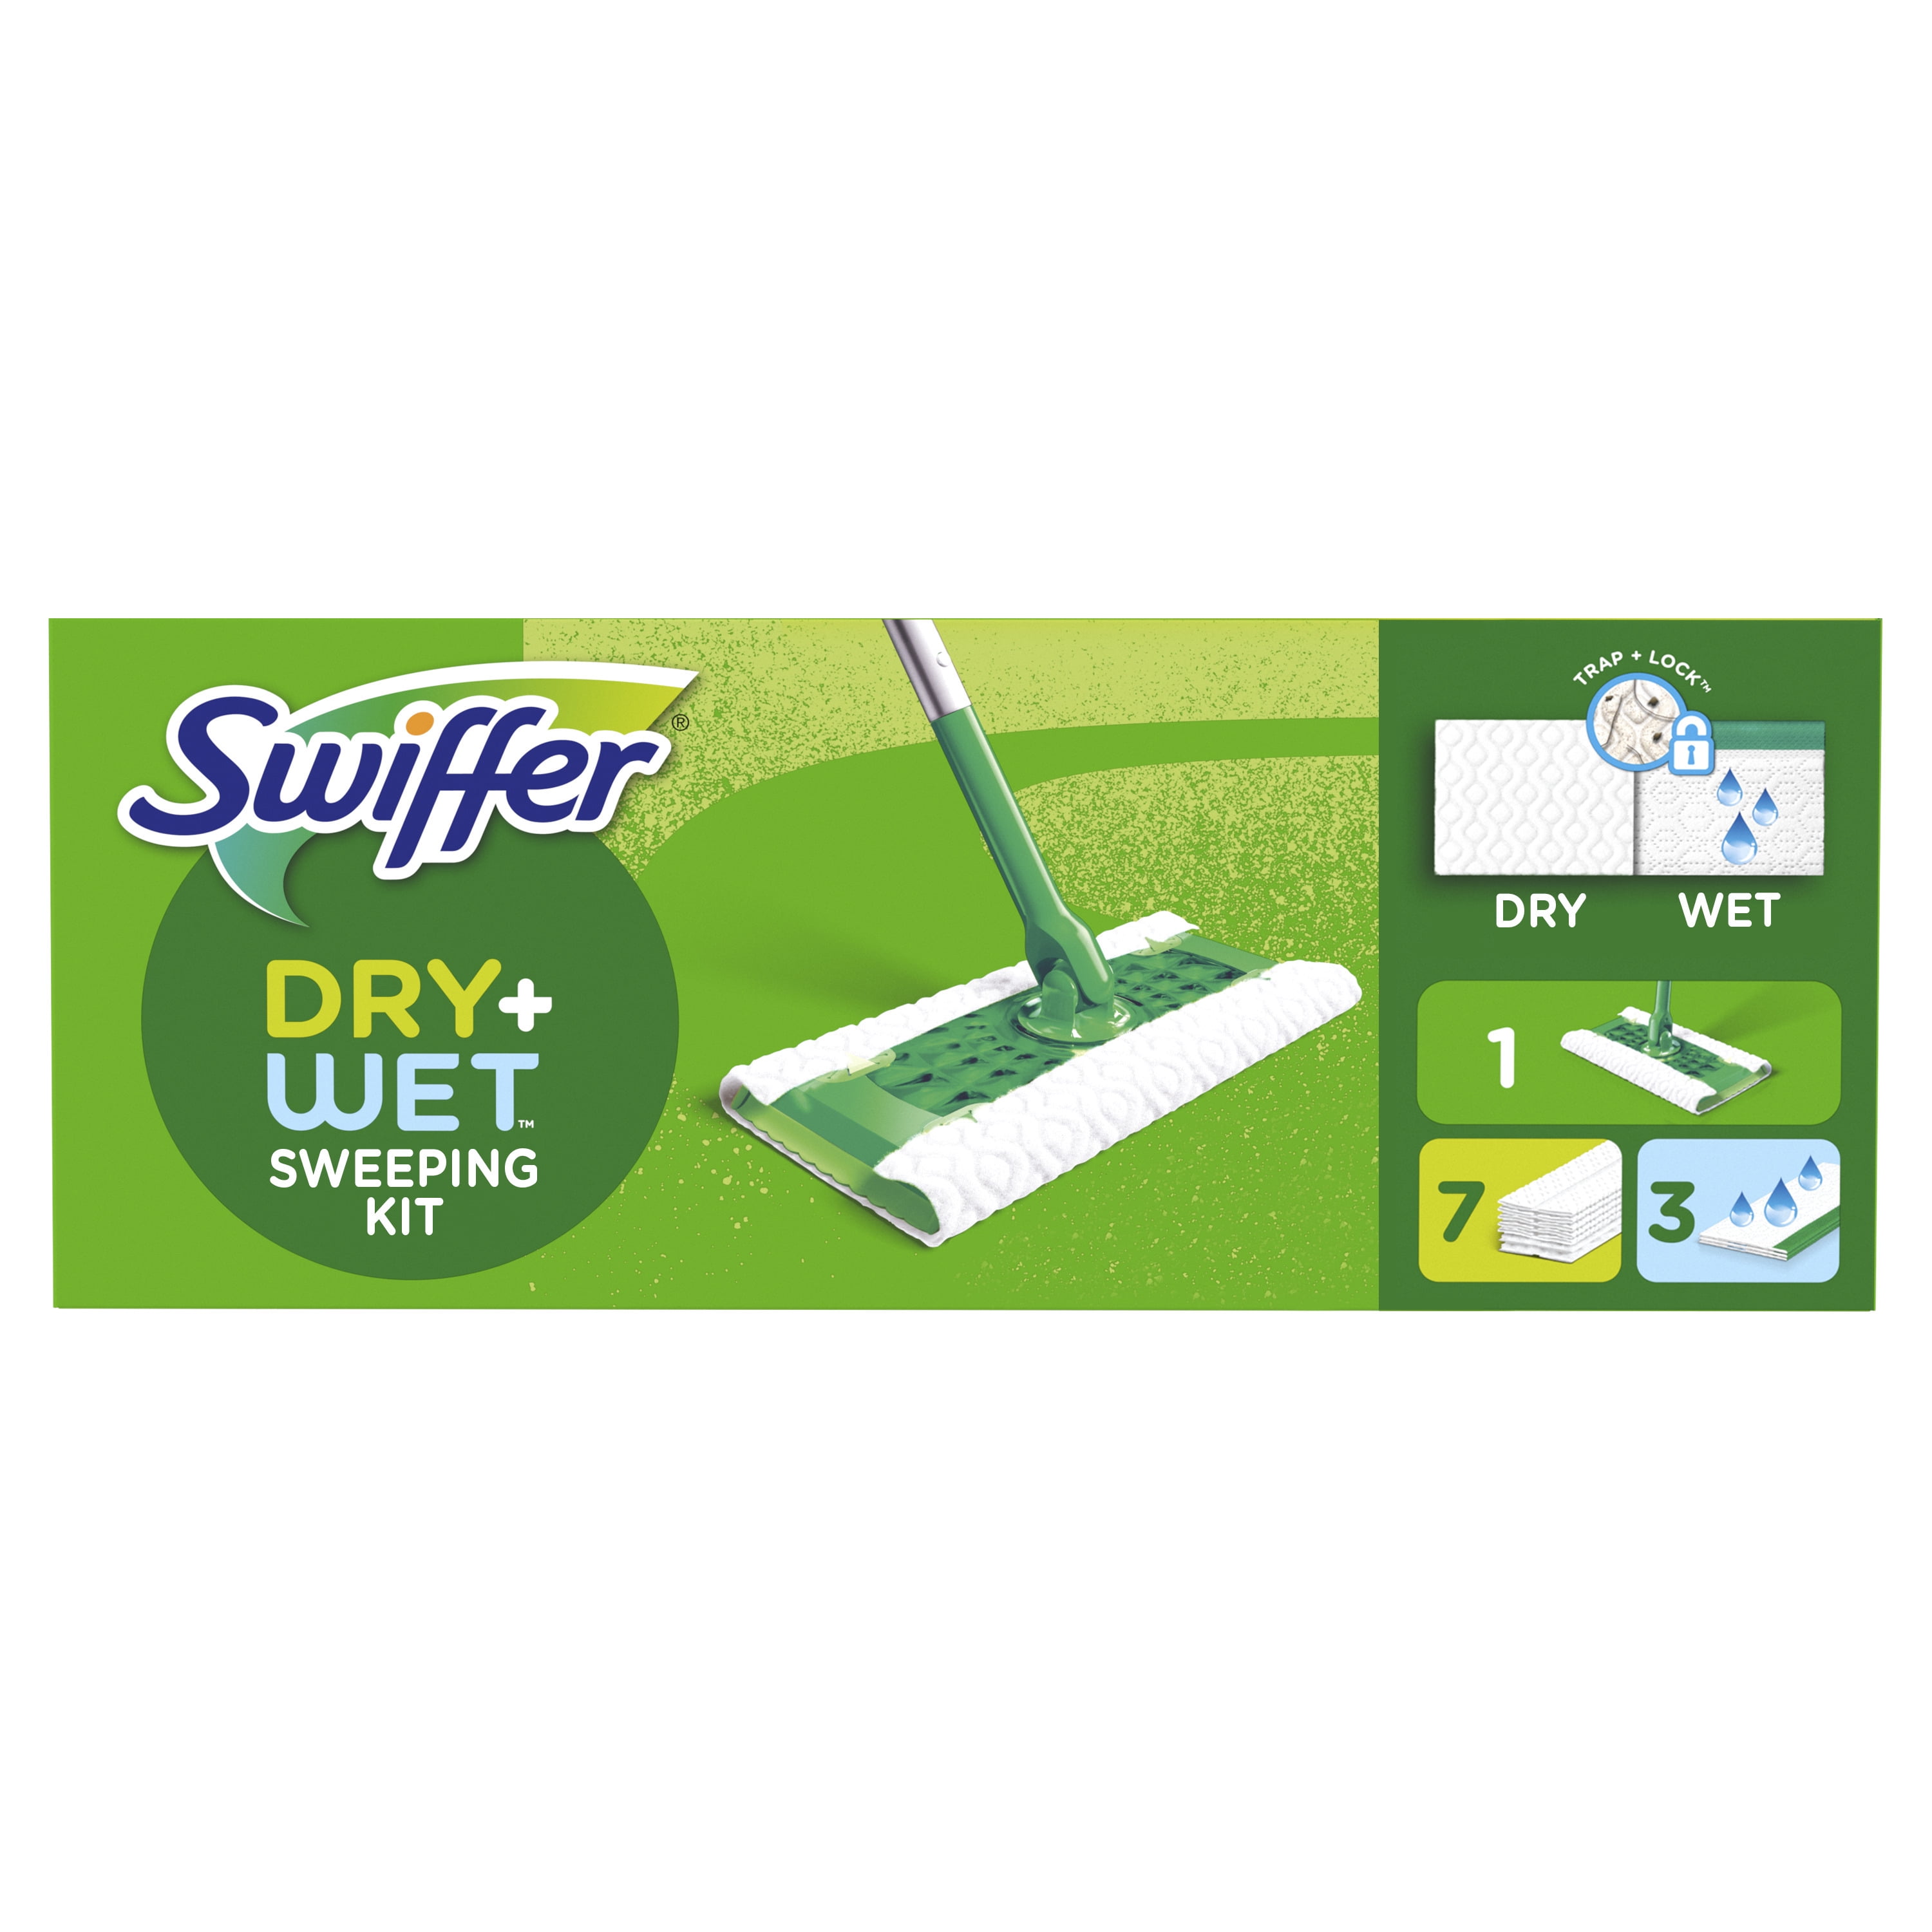 Sweeper Sry Wet Multi Sweeping Kit 1 balayeur, 7 Cameroun